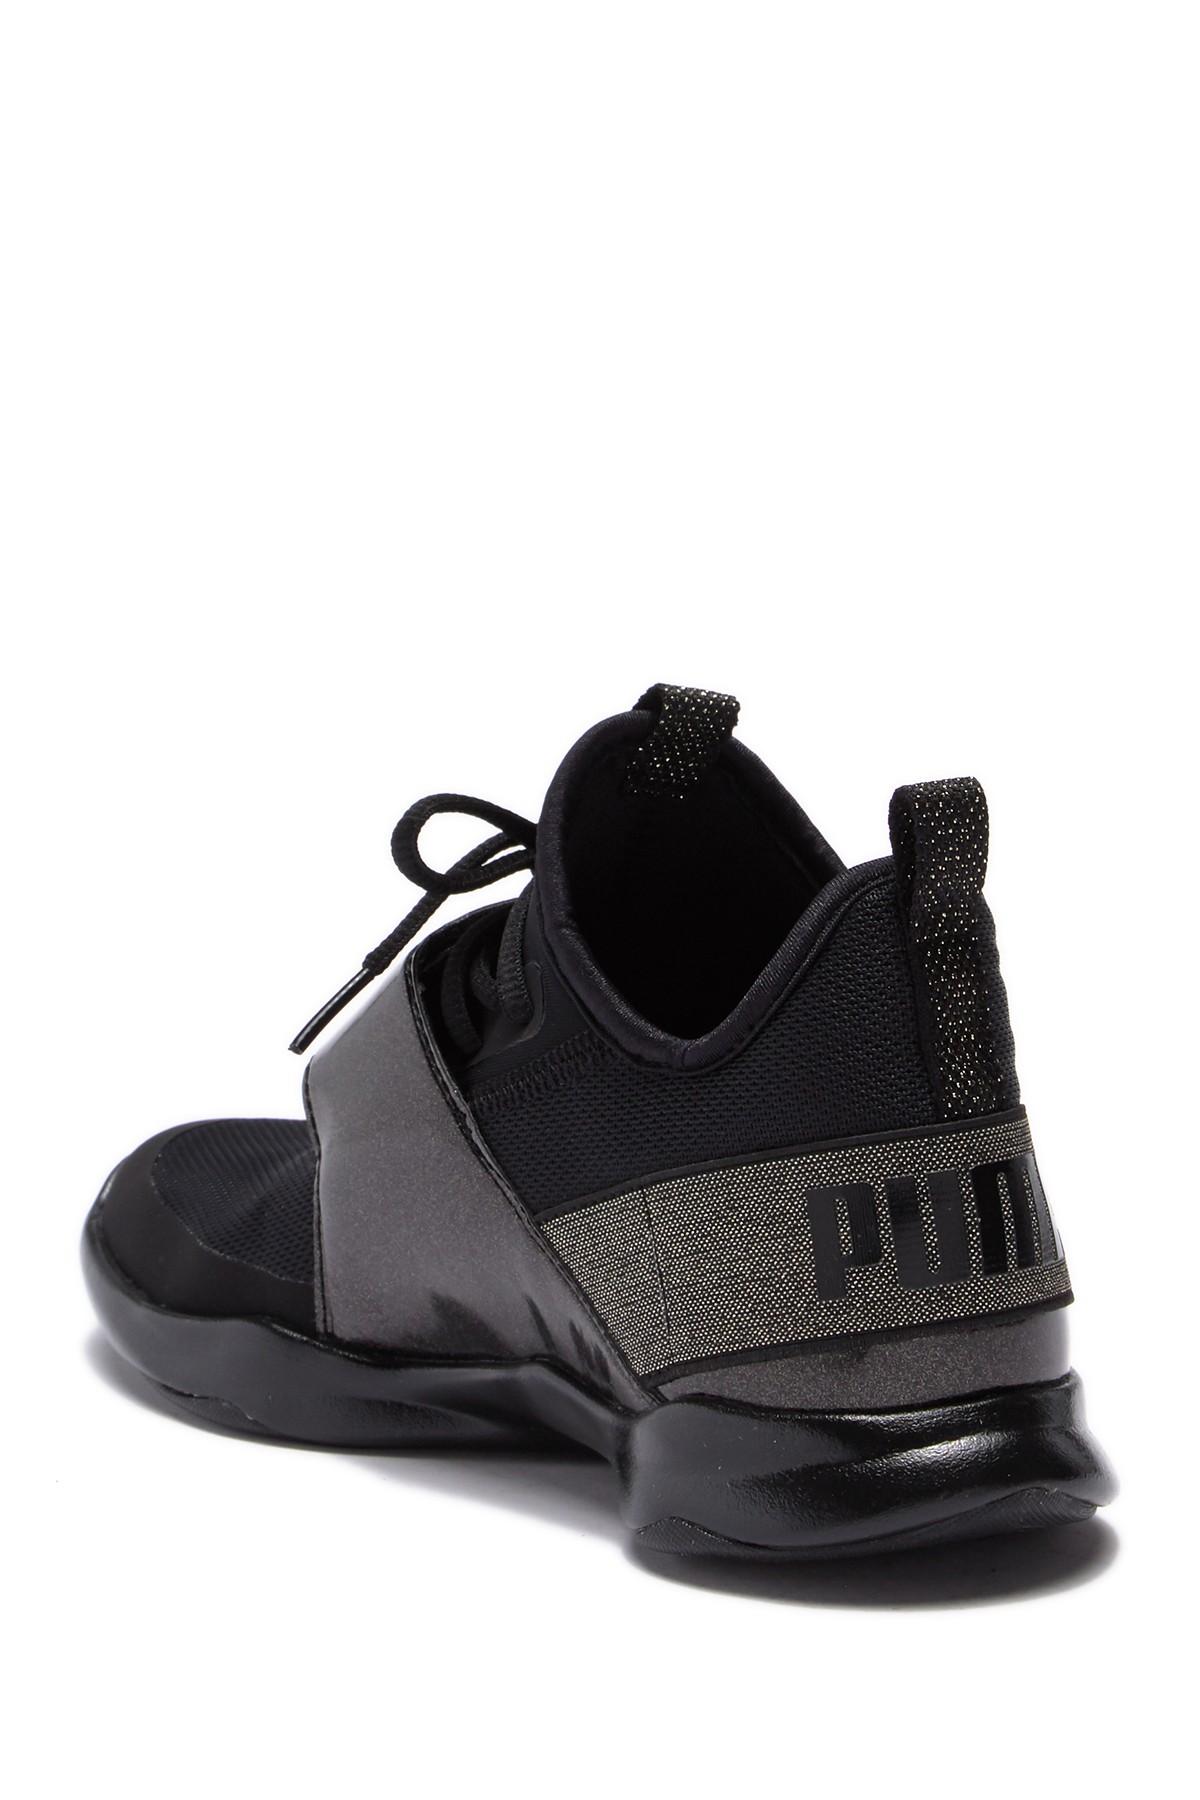 puma dare trainer bling sneakers